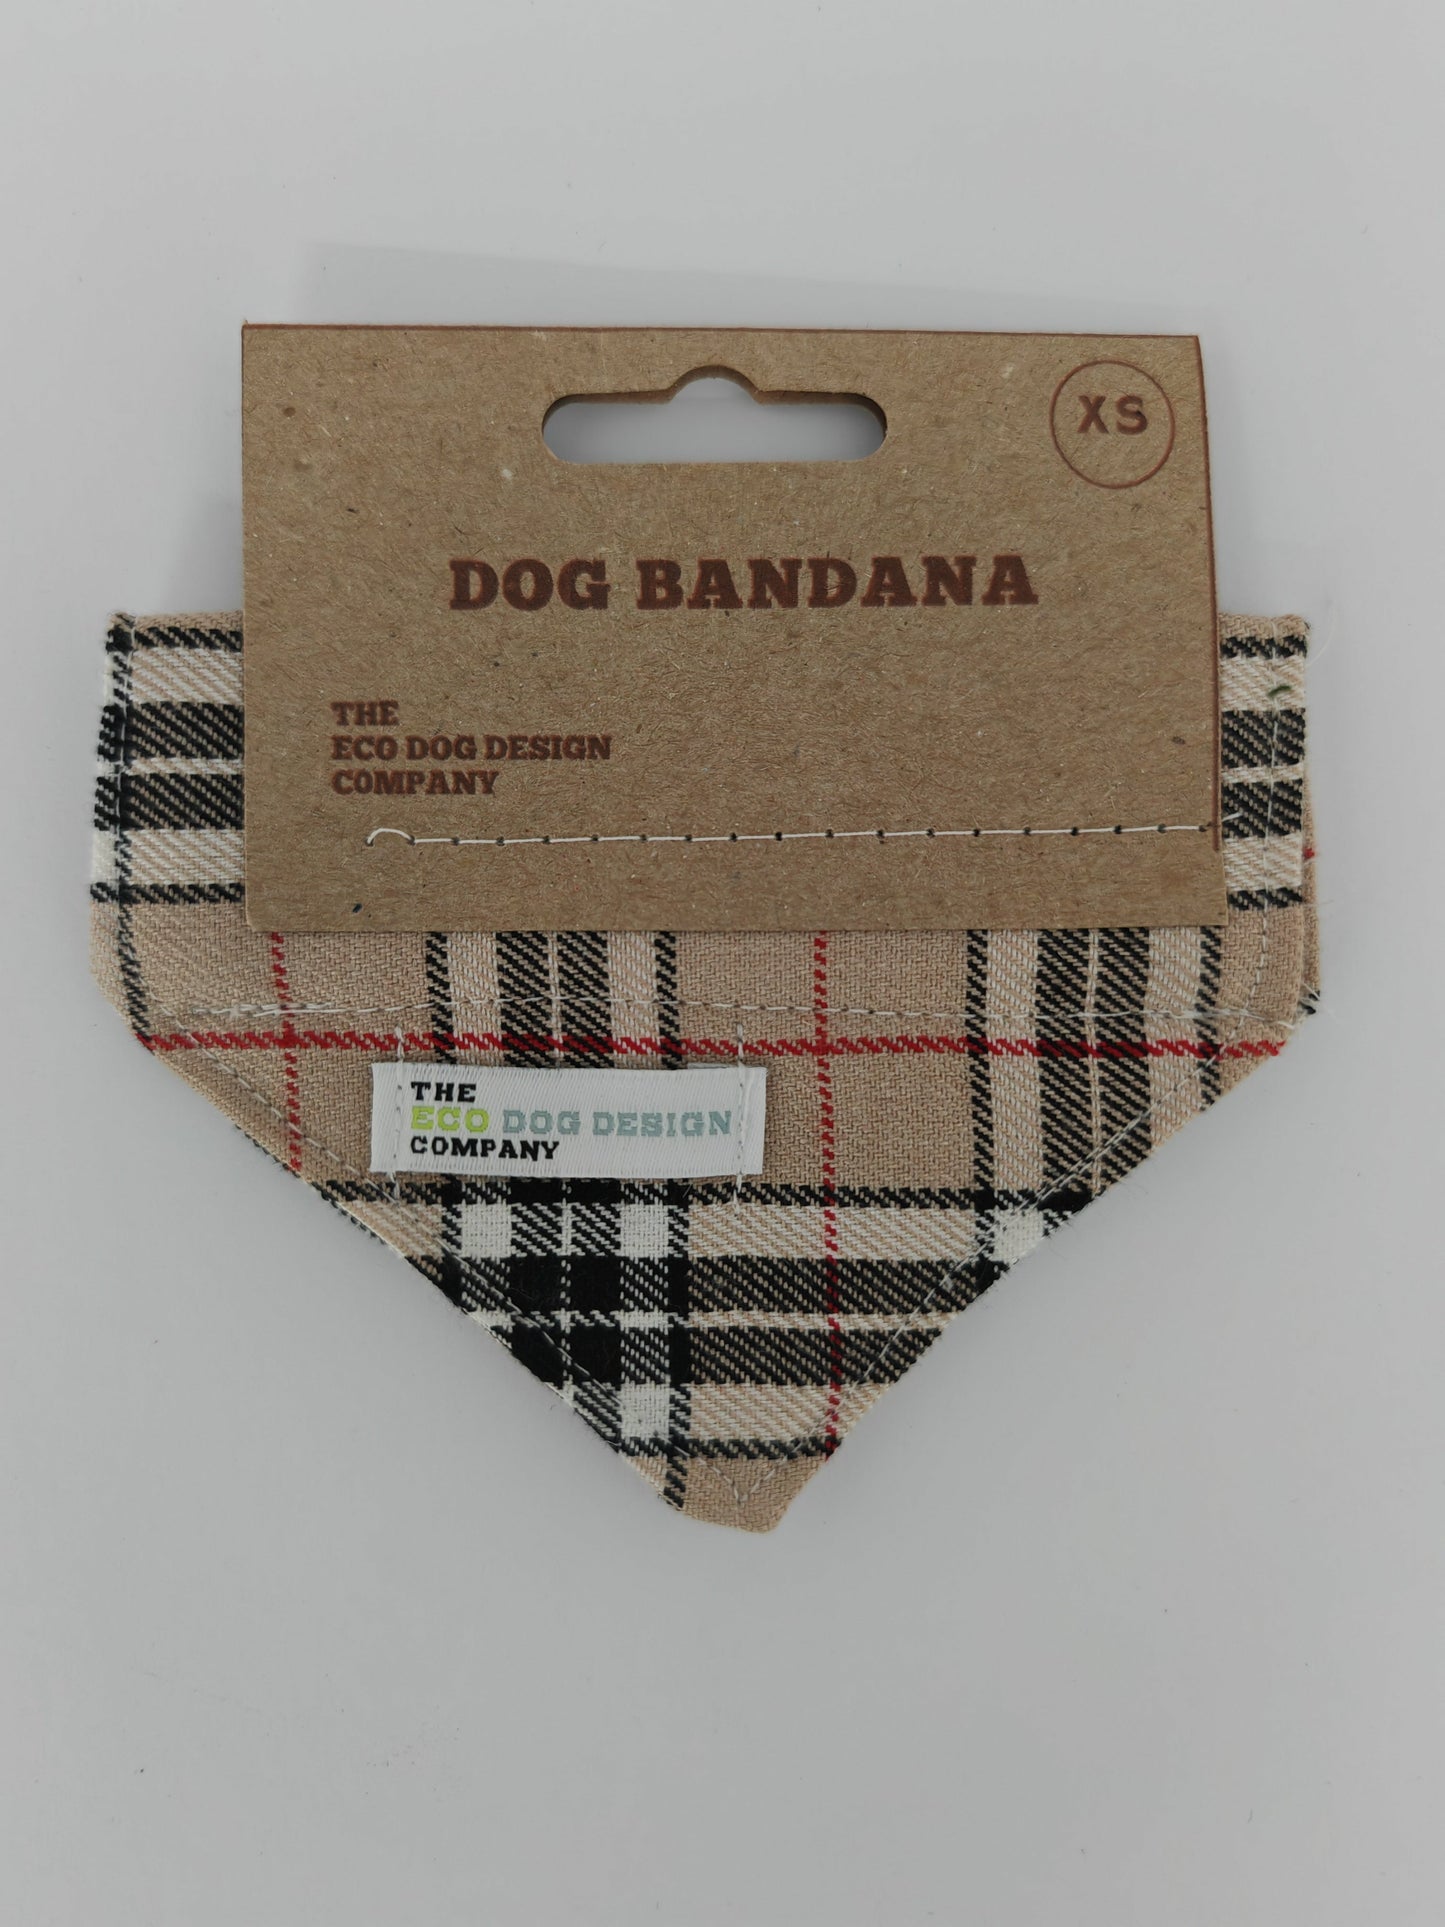 Dog Bandana